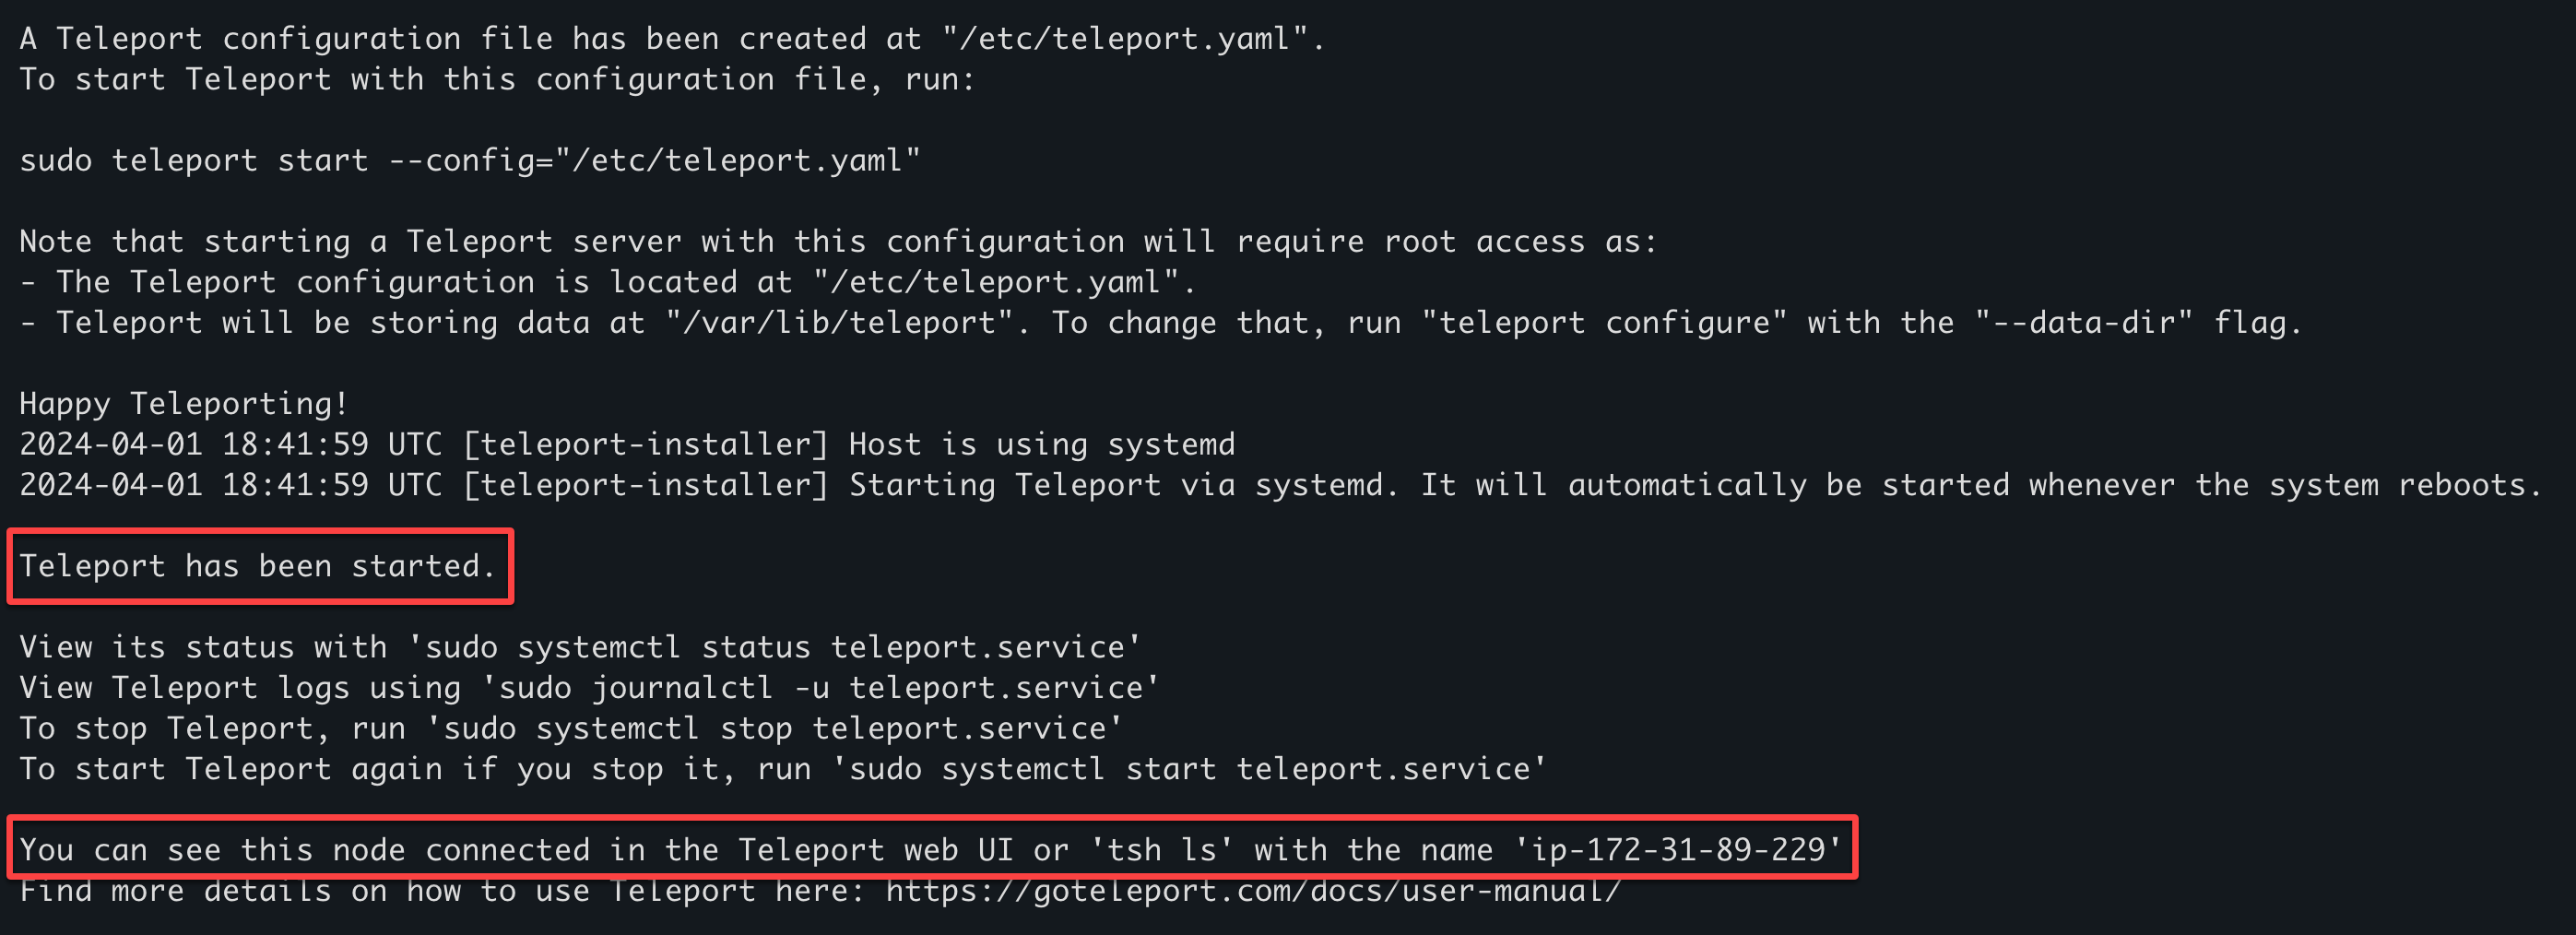 Adding a second server to Teleport